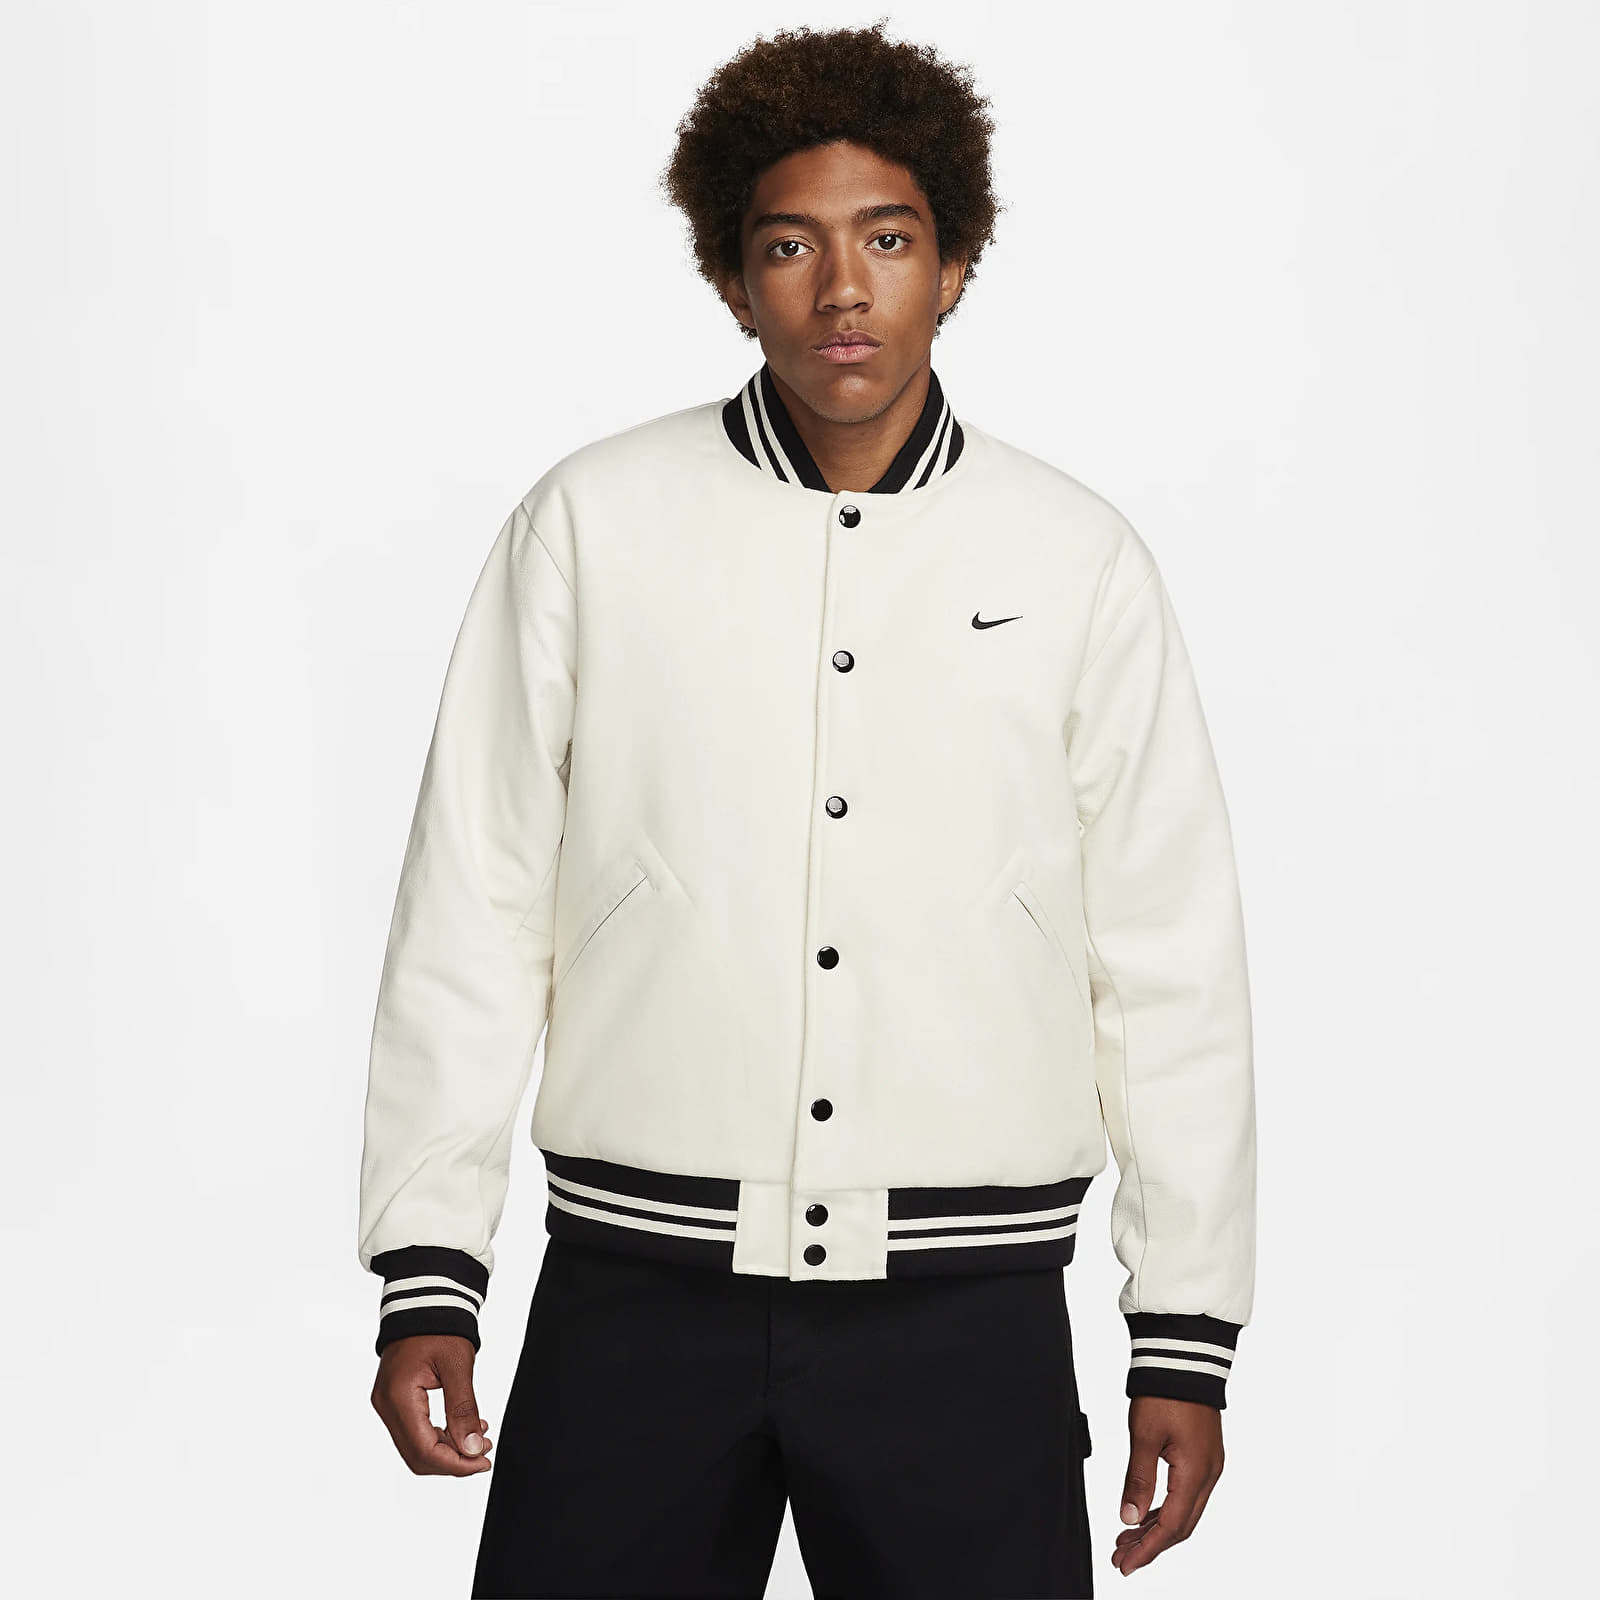 Nike Authentics Men's Varsity Jacket